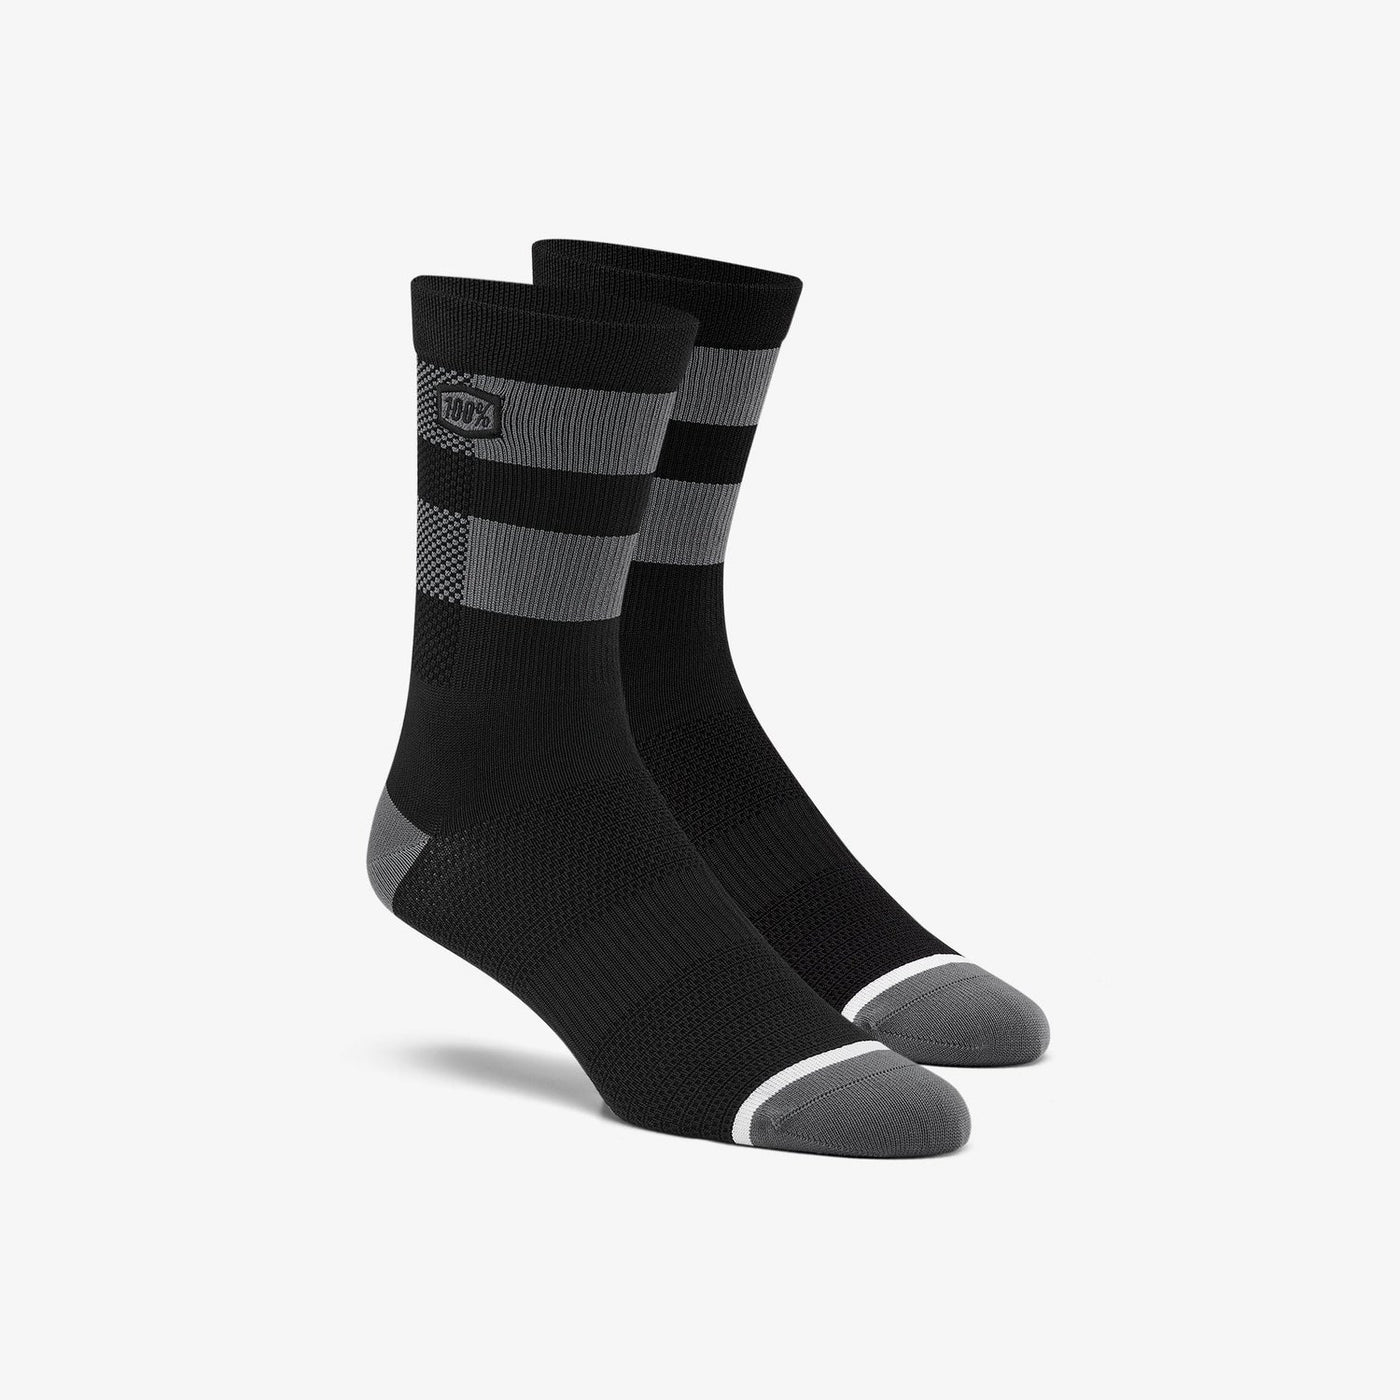 1000% - FLOW Performance MTB Socks Black/Grey